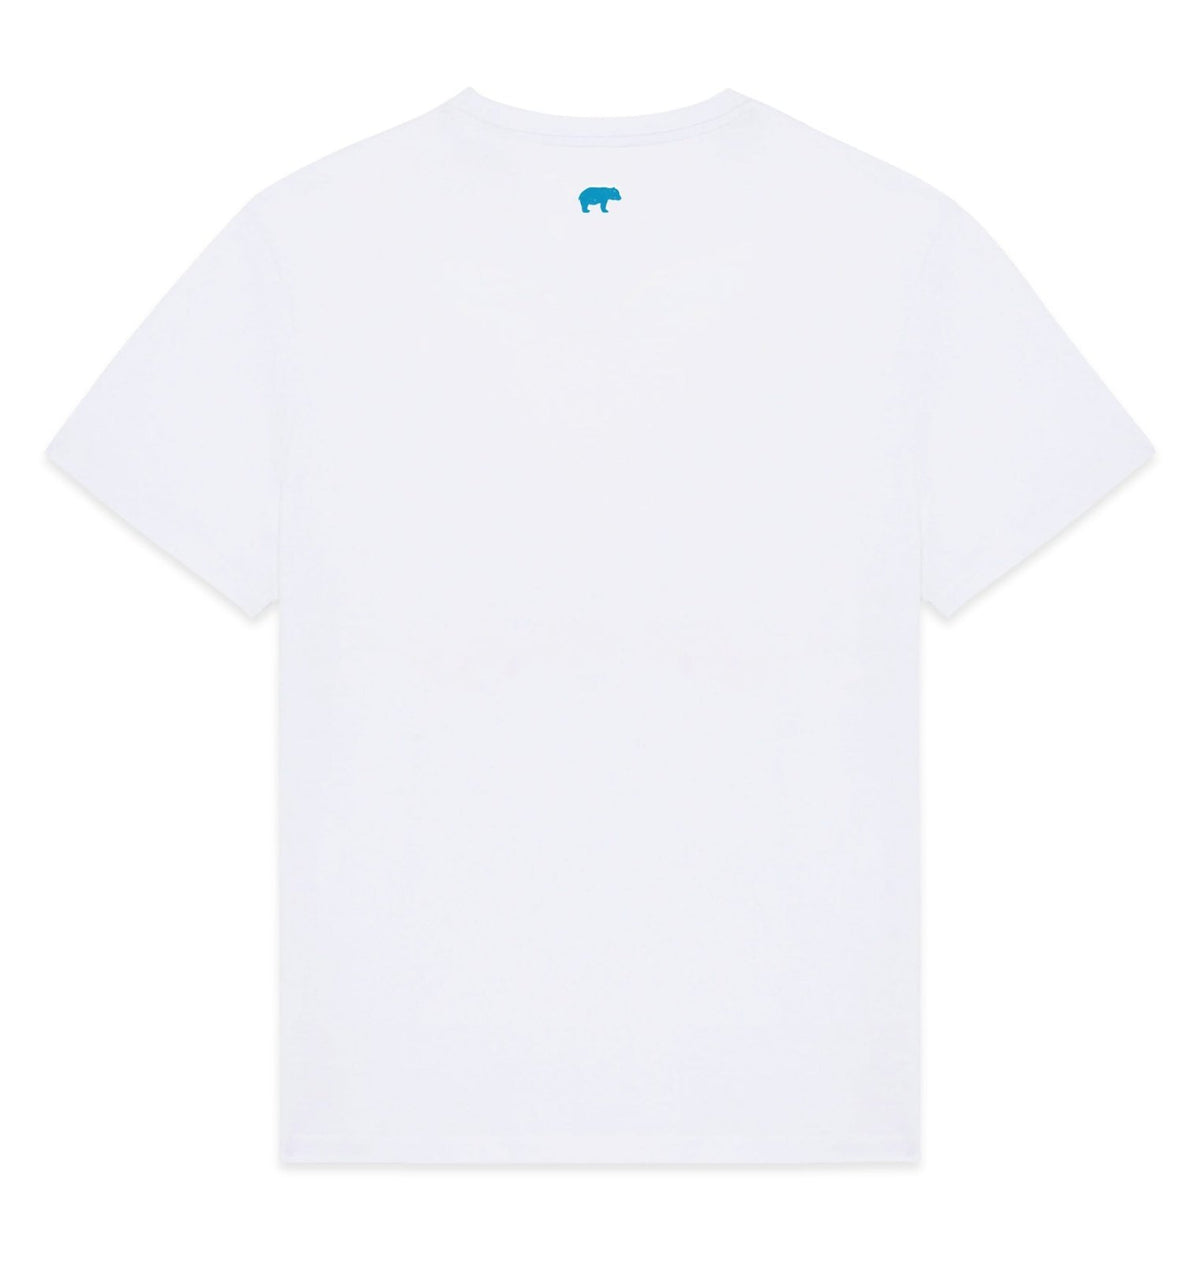 Salty Ocean Front Print Womens T-shirt - Blue Panda